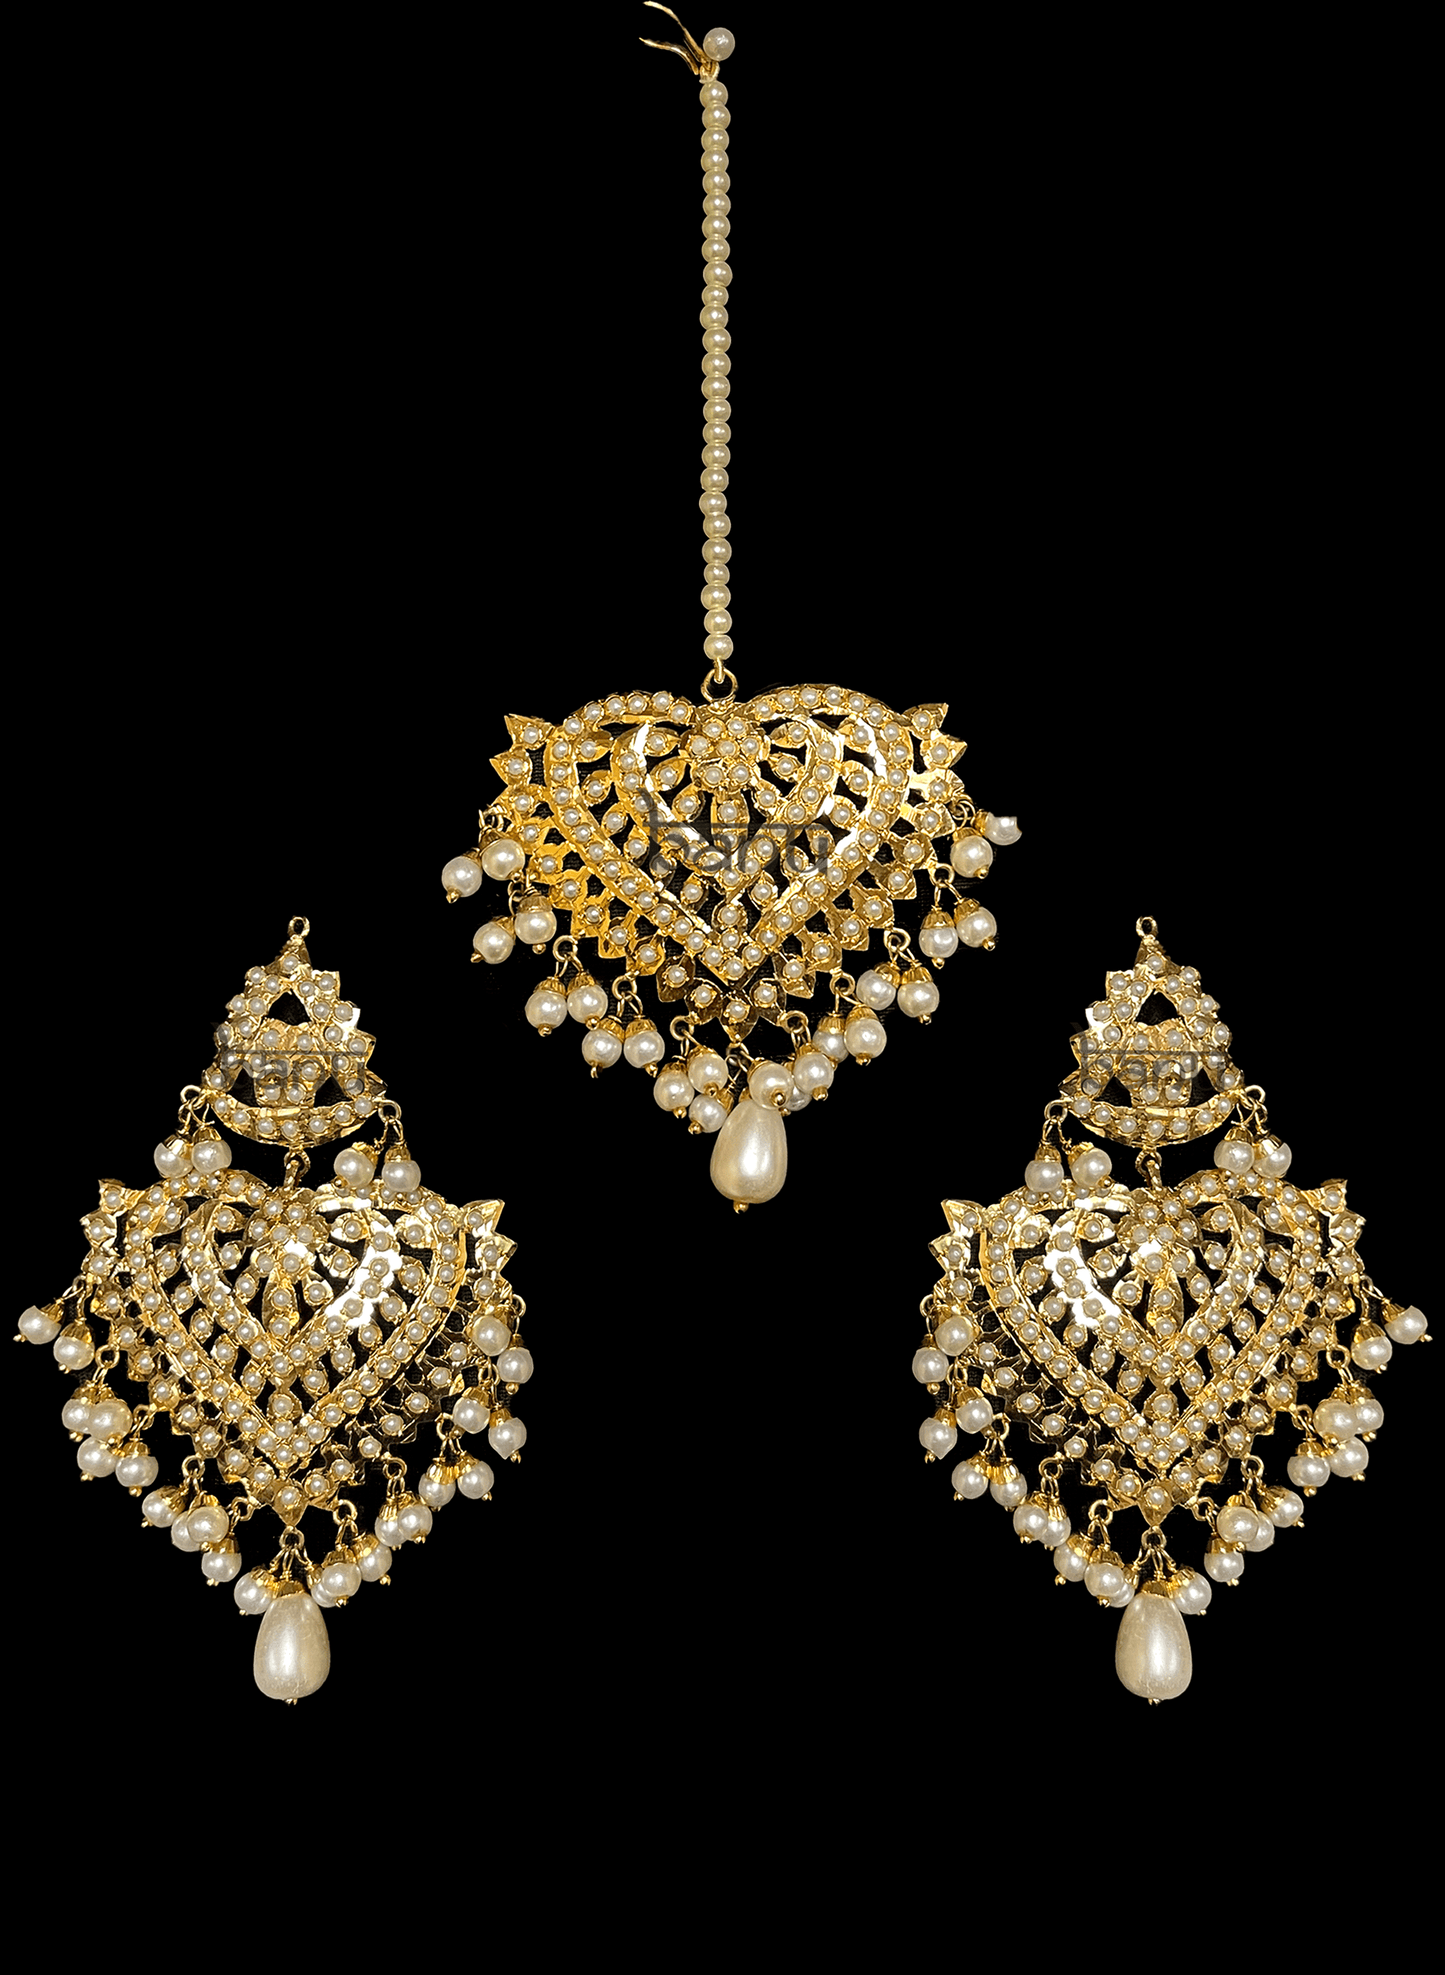 Kaza - Modern Indian Bridal Jewelry w/ Long Jadau pearl necklace & pendant